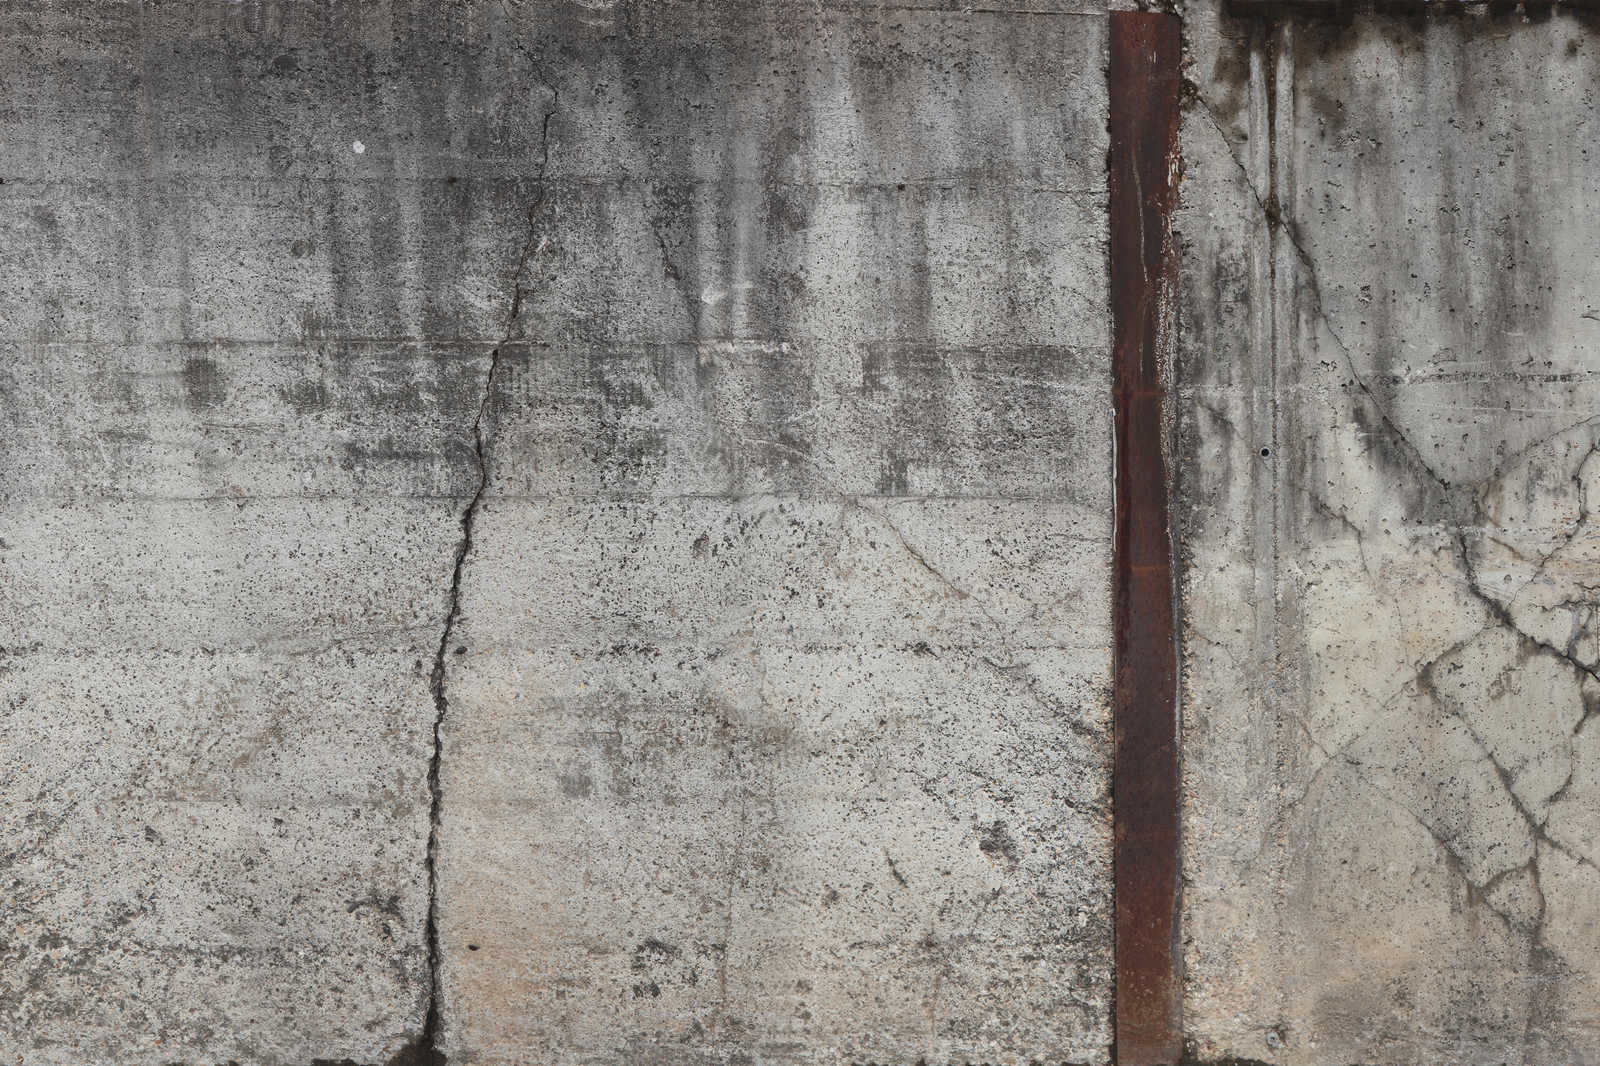             Leinwandbild Beton Wand im rustikalen Stil Stahlbeton – 1,20 m x 0,80 m
        